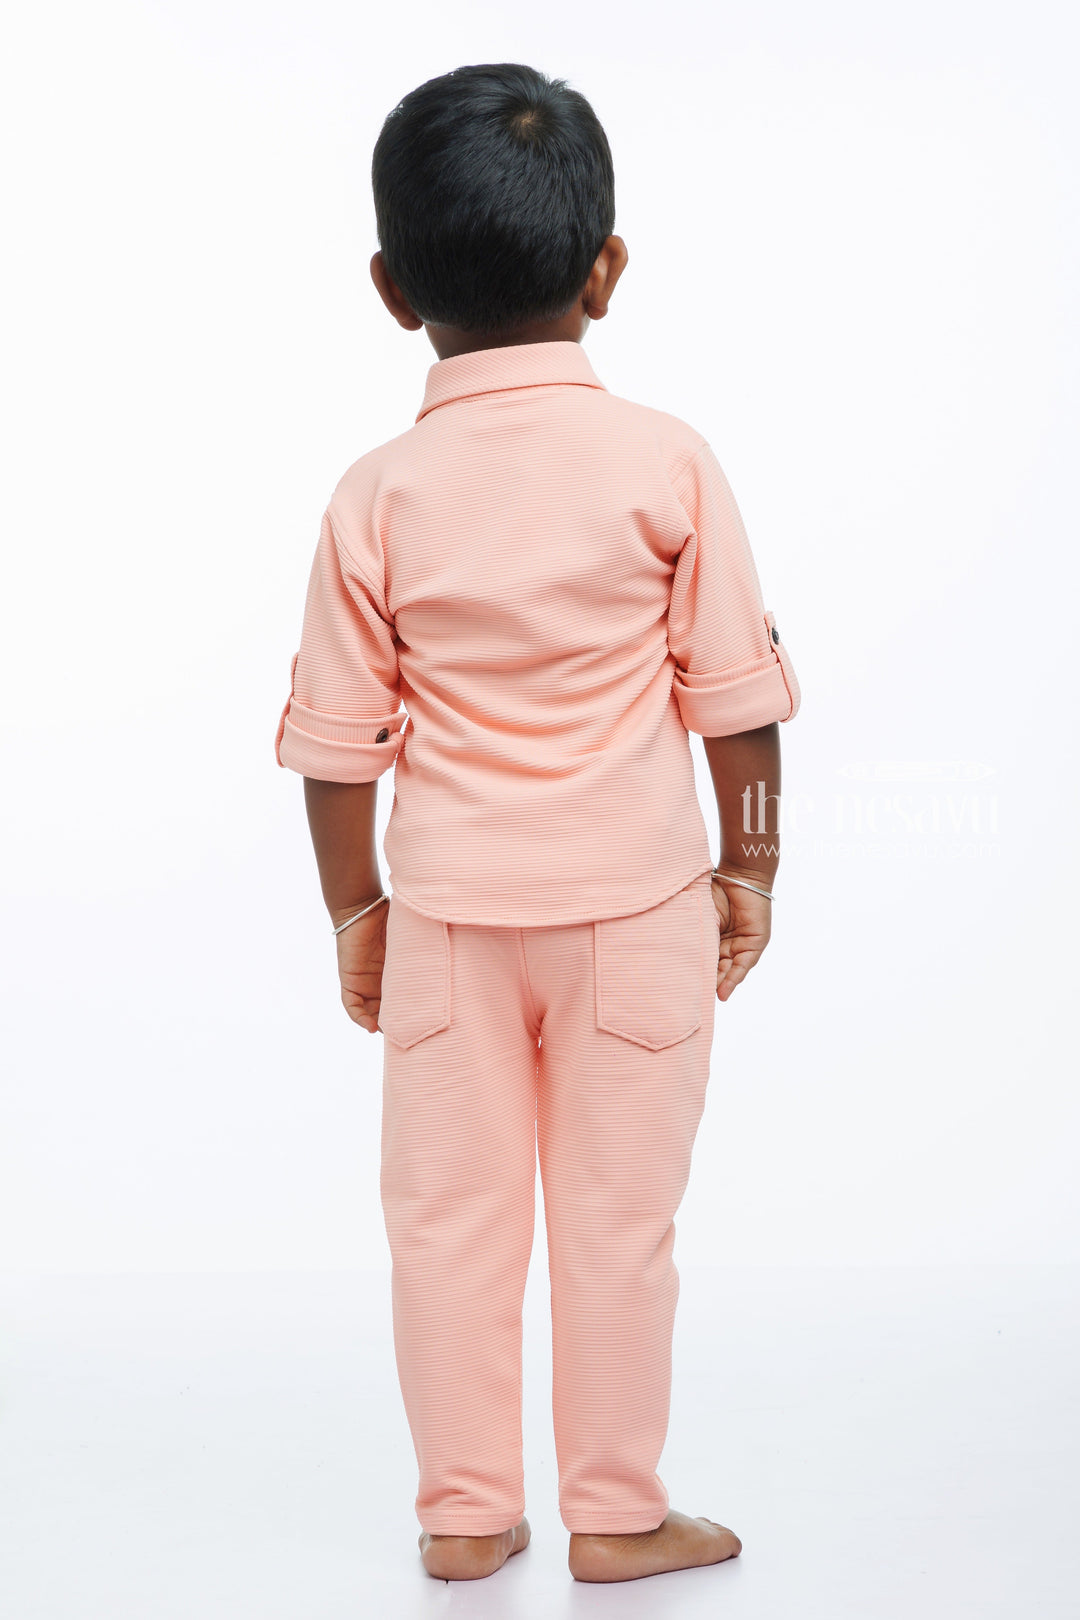 The Nesavu Boys Casual Set Boys Pastel Pink Shirt and Pant Set - Trendy and Comfortable Nesavu Boys Chic Pastel Pink Casual Set | Ideal for Stylish Comfort | The Nesavu